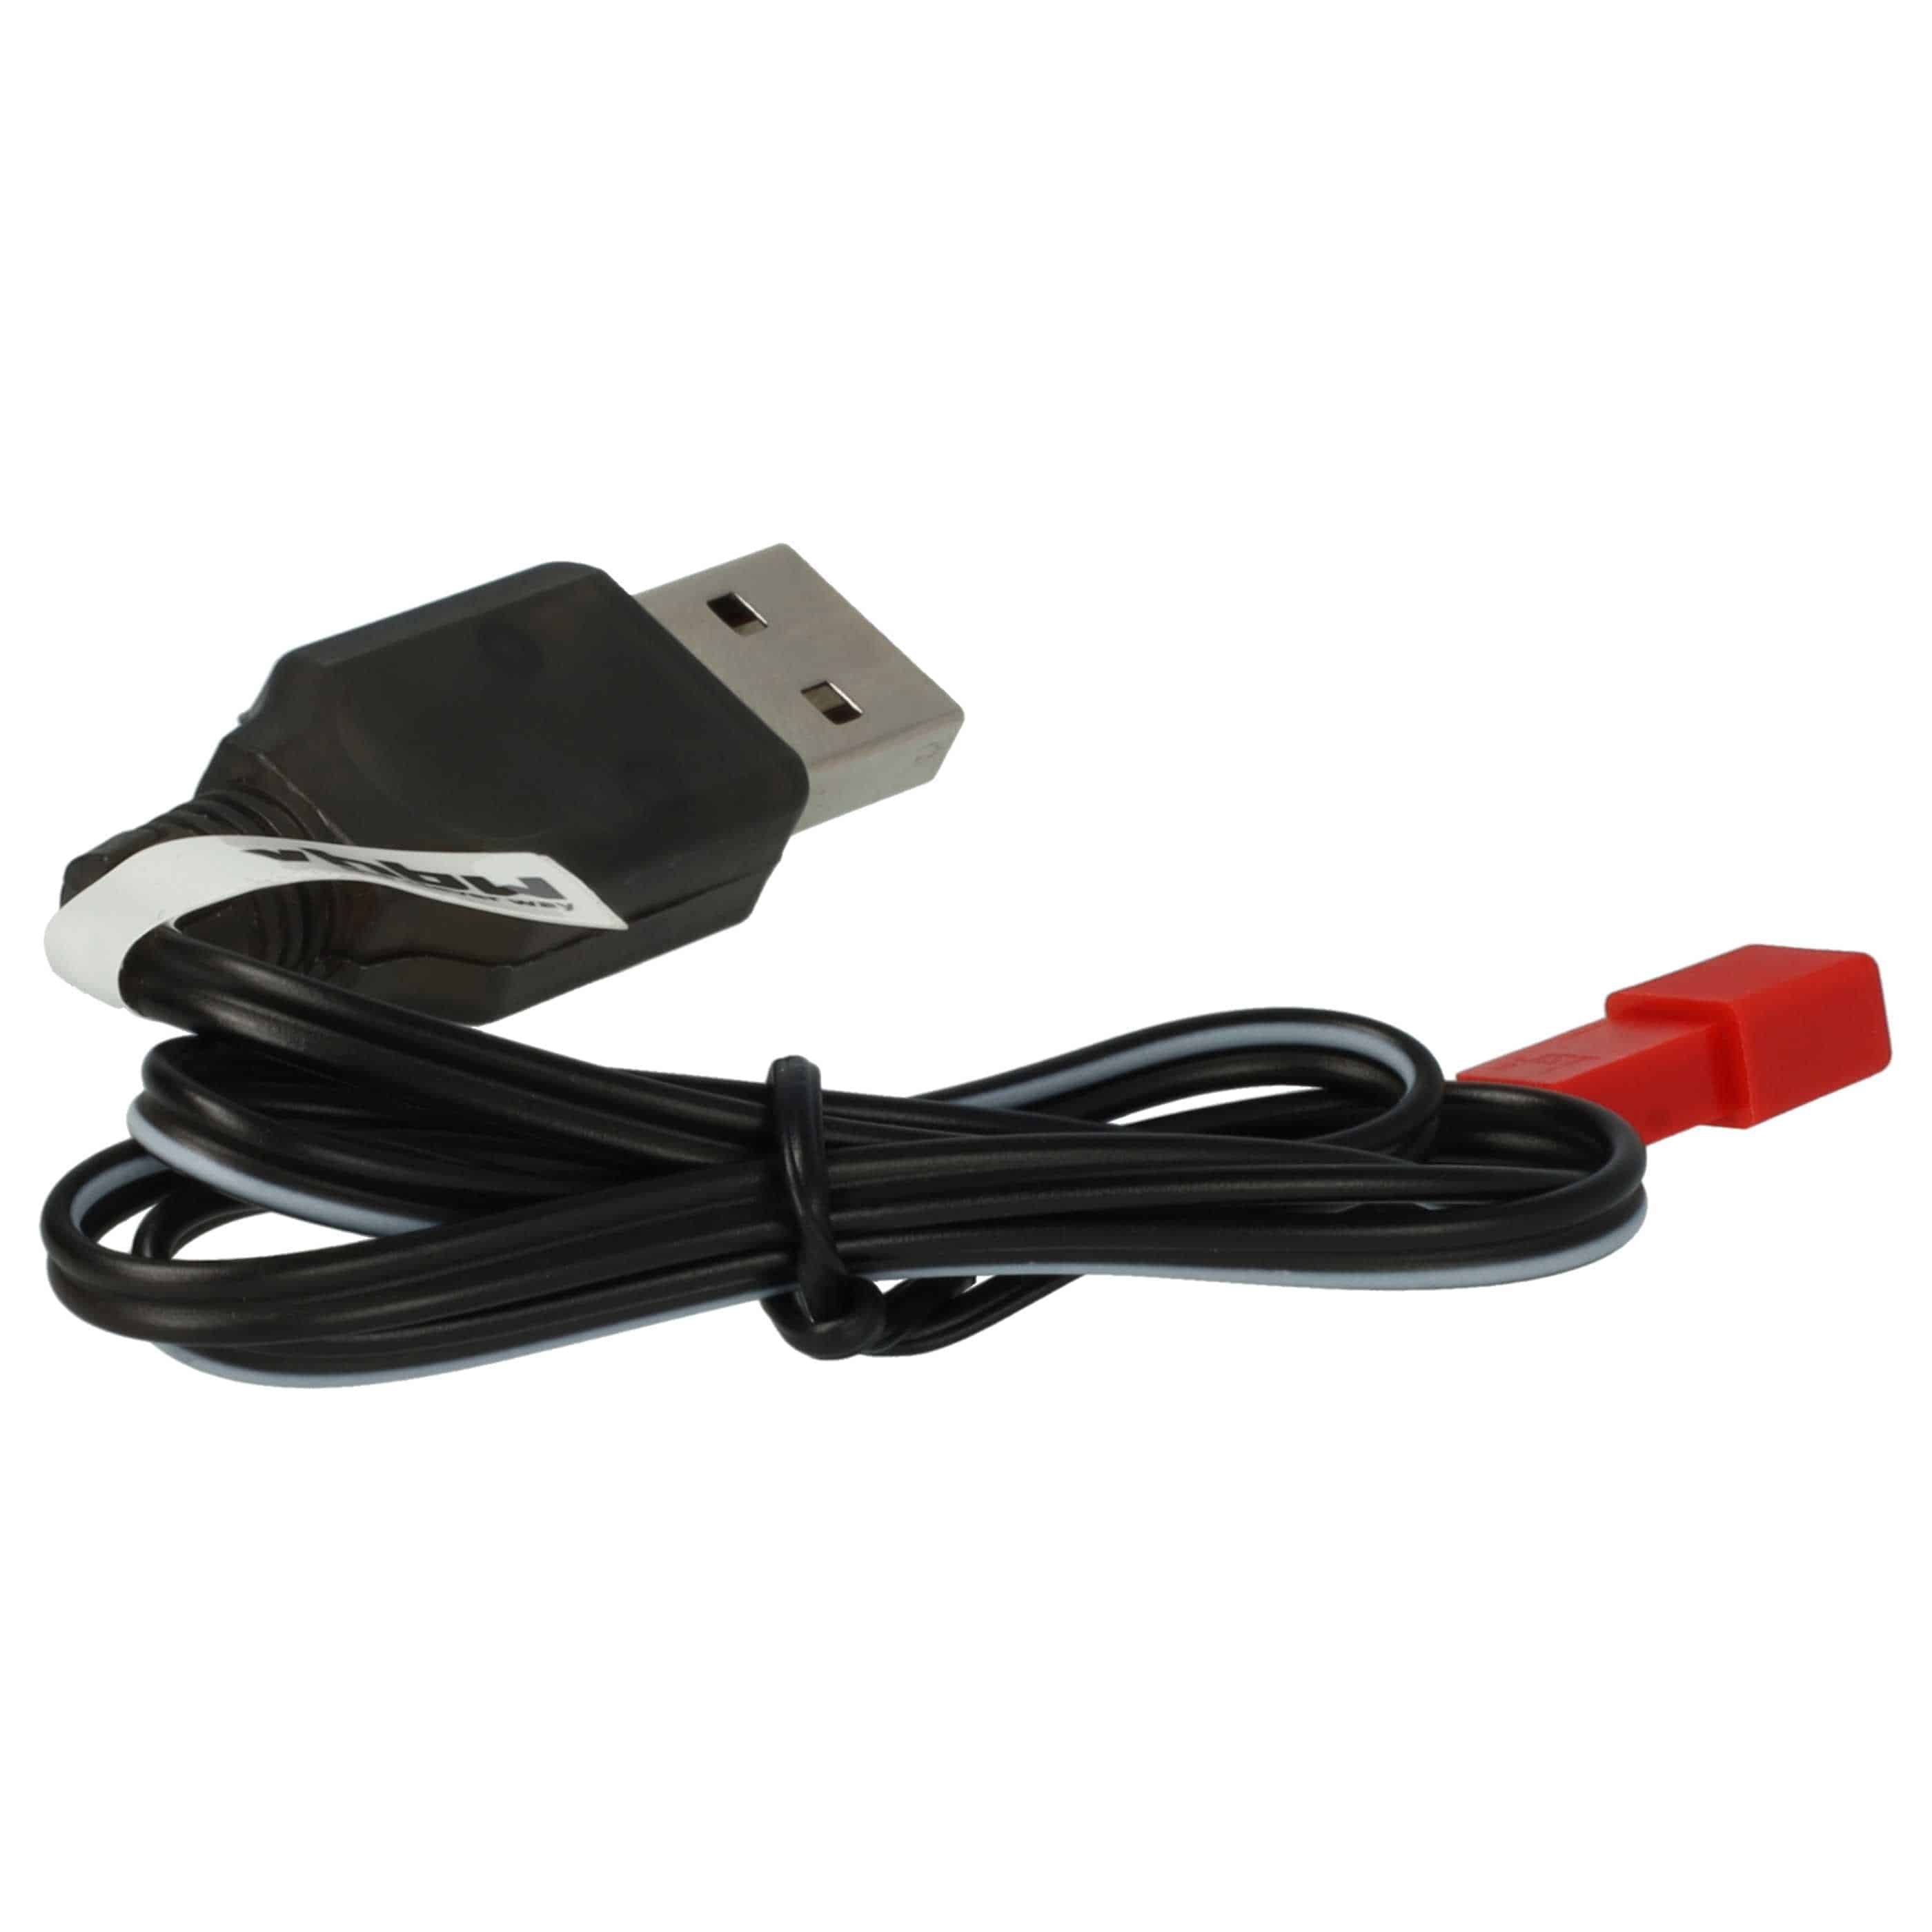 USB-Ladekabel passend für RC-Akkus mit JST-Anschluss, RC-Modellbau Akkupacks - 60cm 3,6V